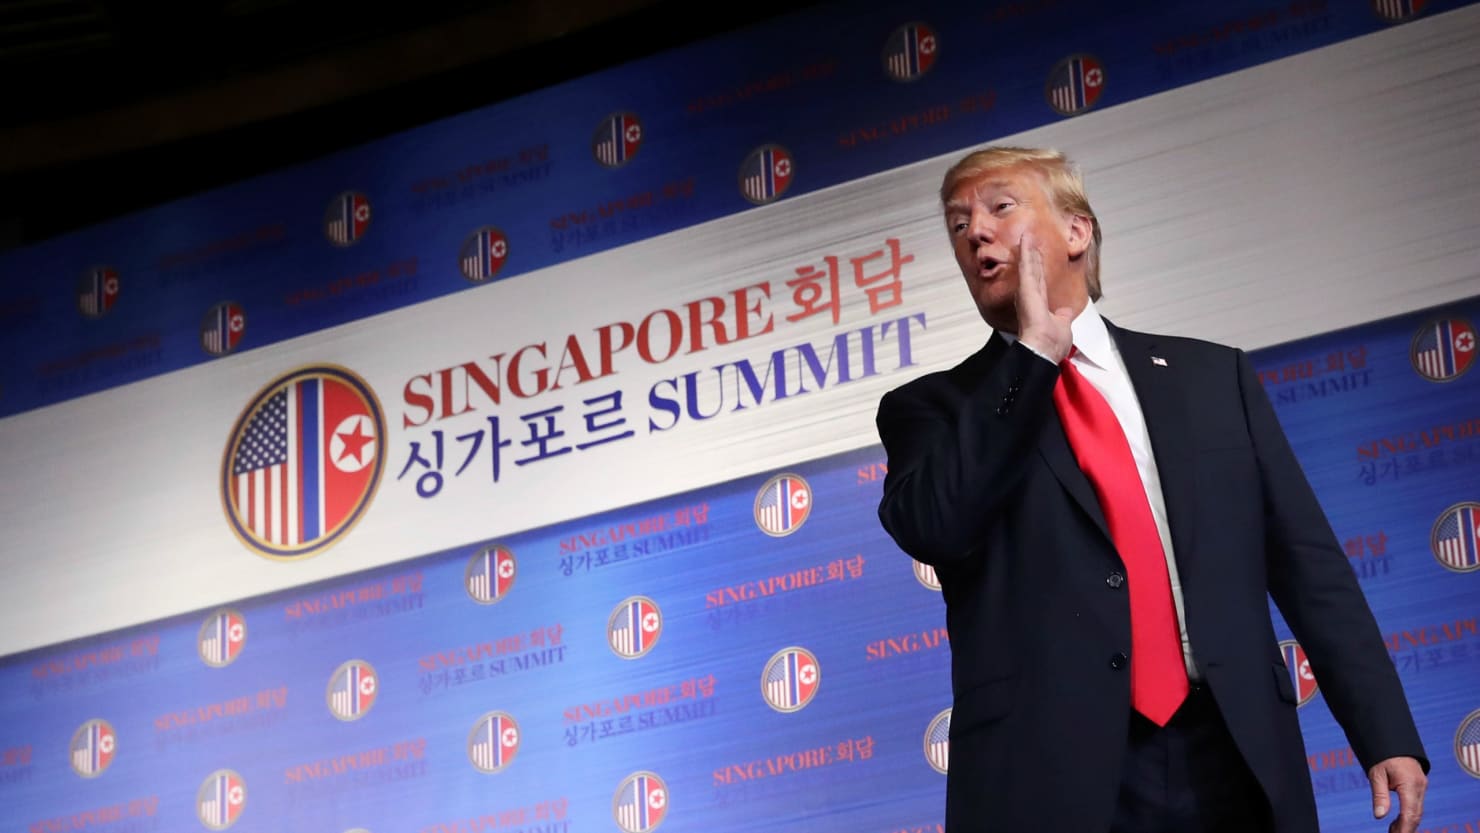 Trump Played Kim Jong Un This Crazily Intense Video at Meeting